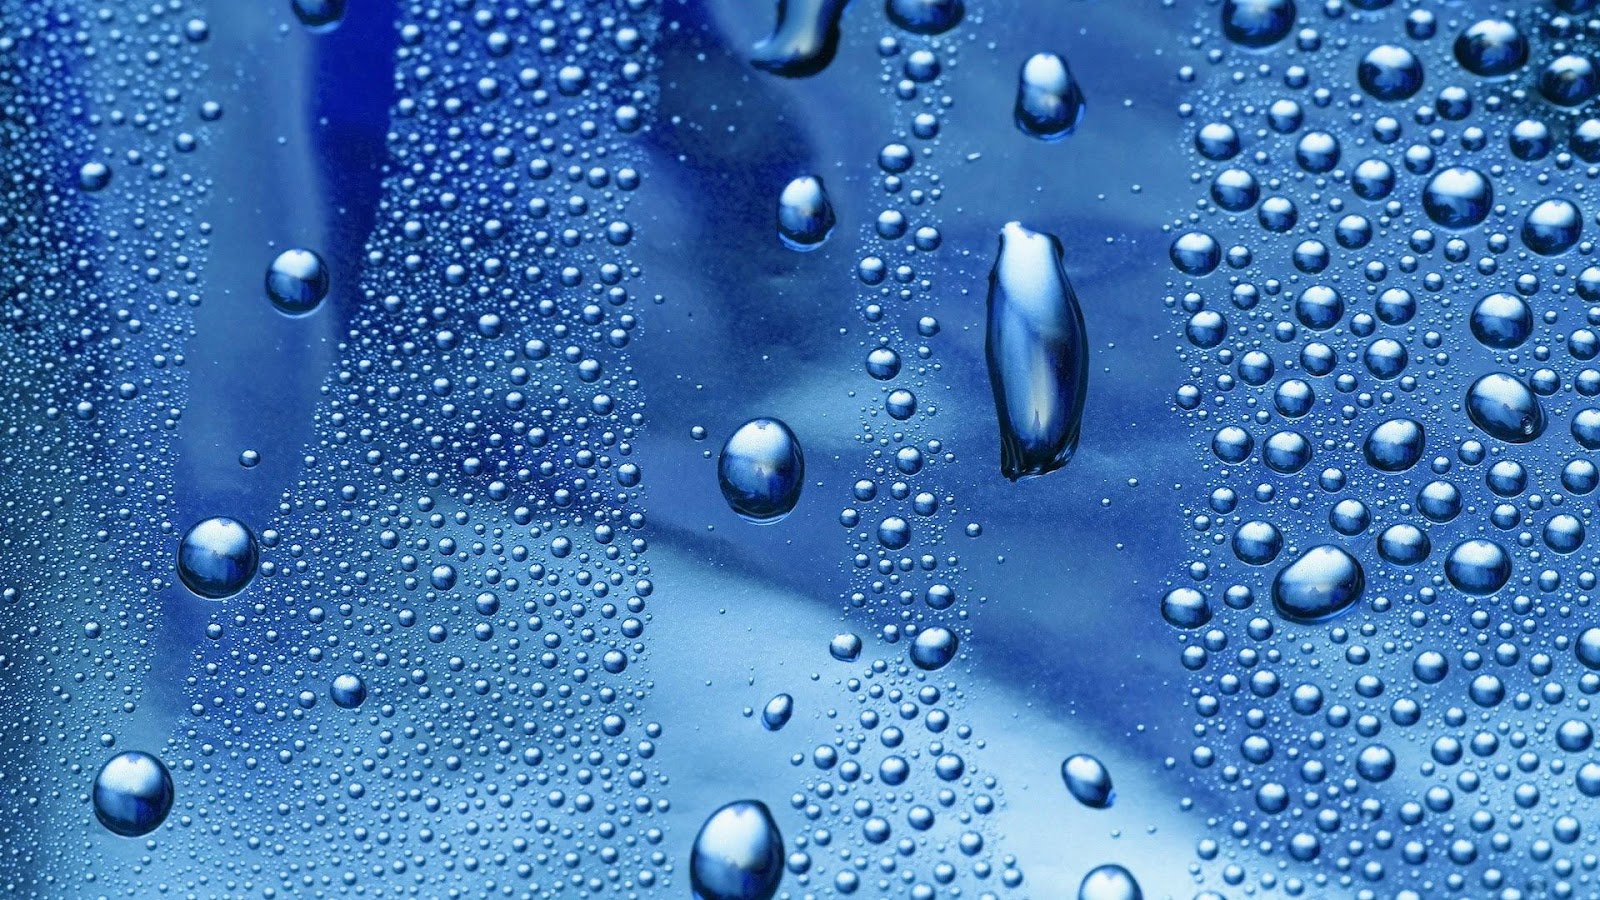 raindrops on blue window wallpaper   o